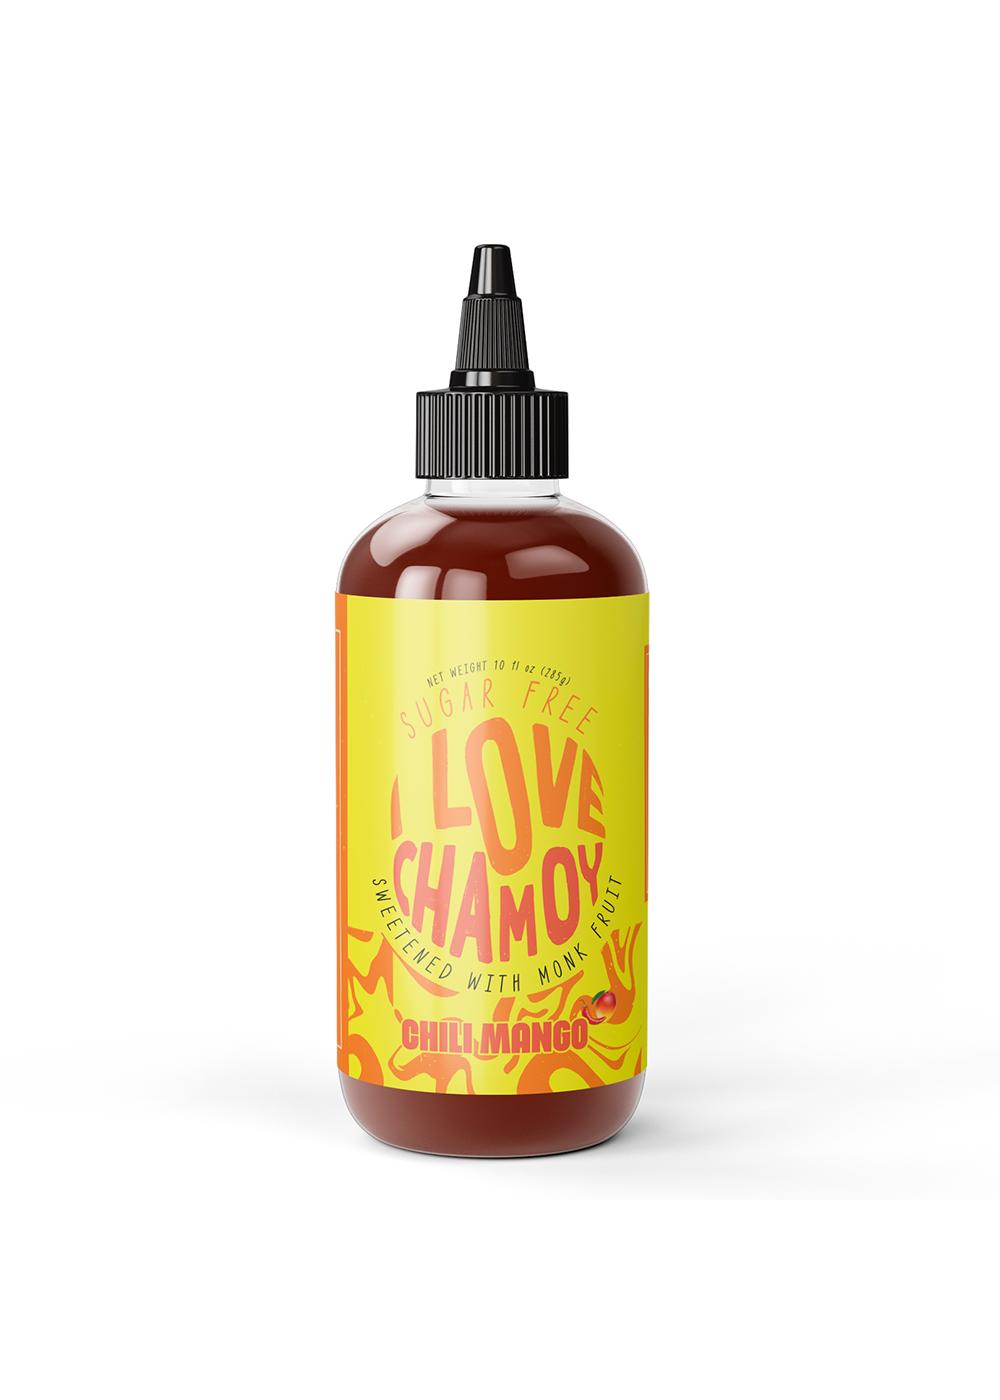 I Love Chamoy  Sugar Free Chili Mango Sauce; image 1 of 2